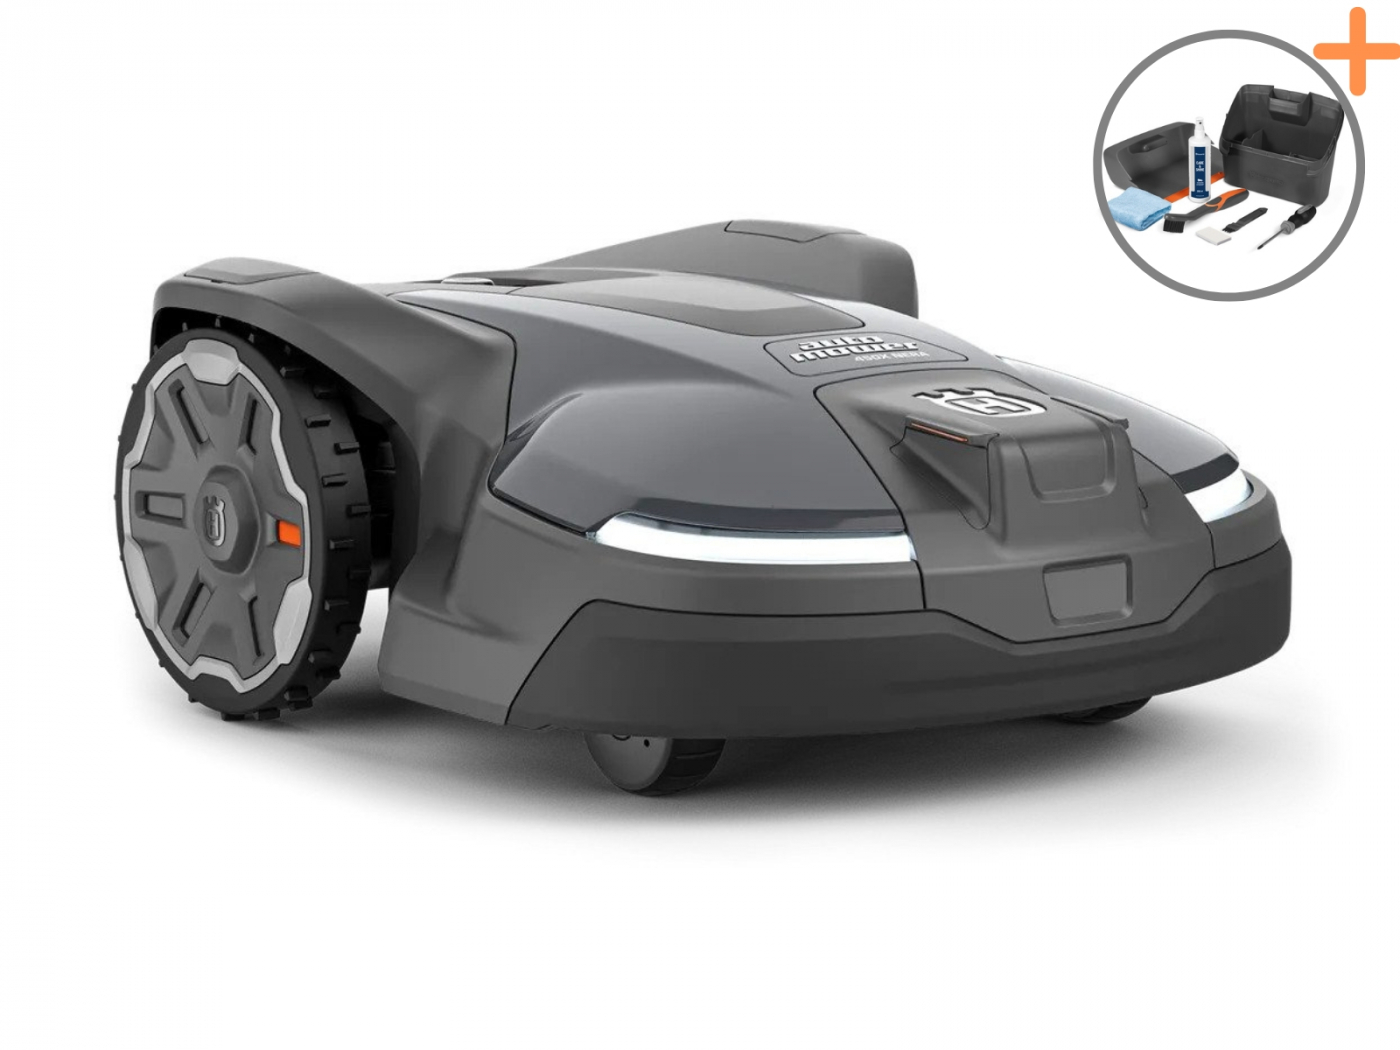 Højttaler Appel til at være attraktiv Mudret Husqvarna Automower® 450X Nera Robotic Lawn Mower 9705353-21